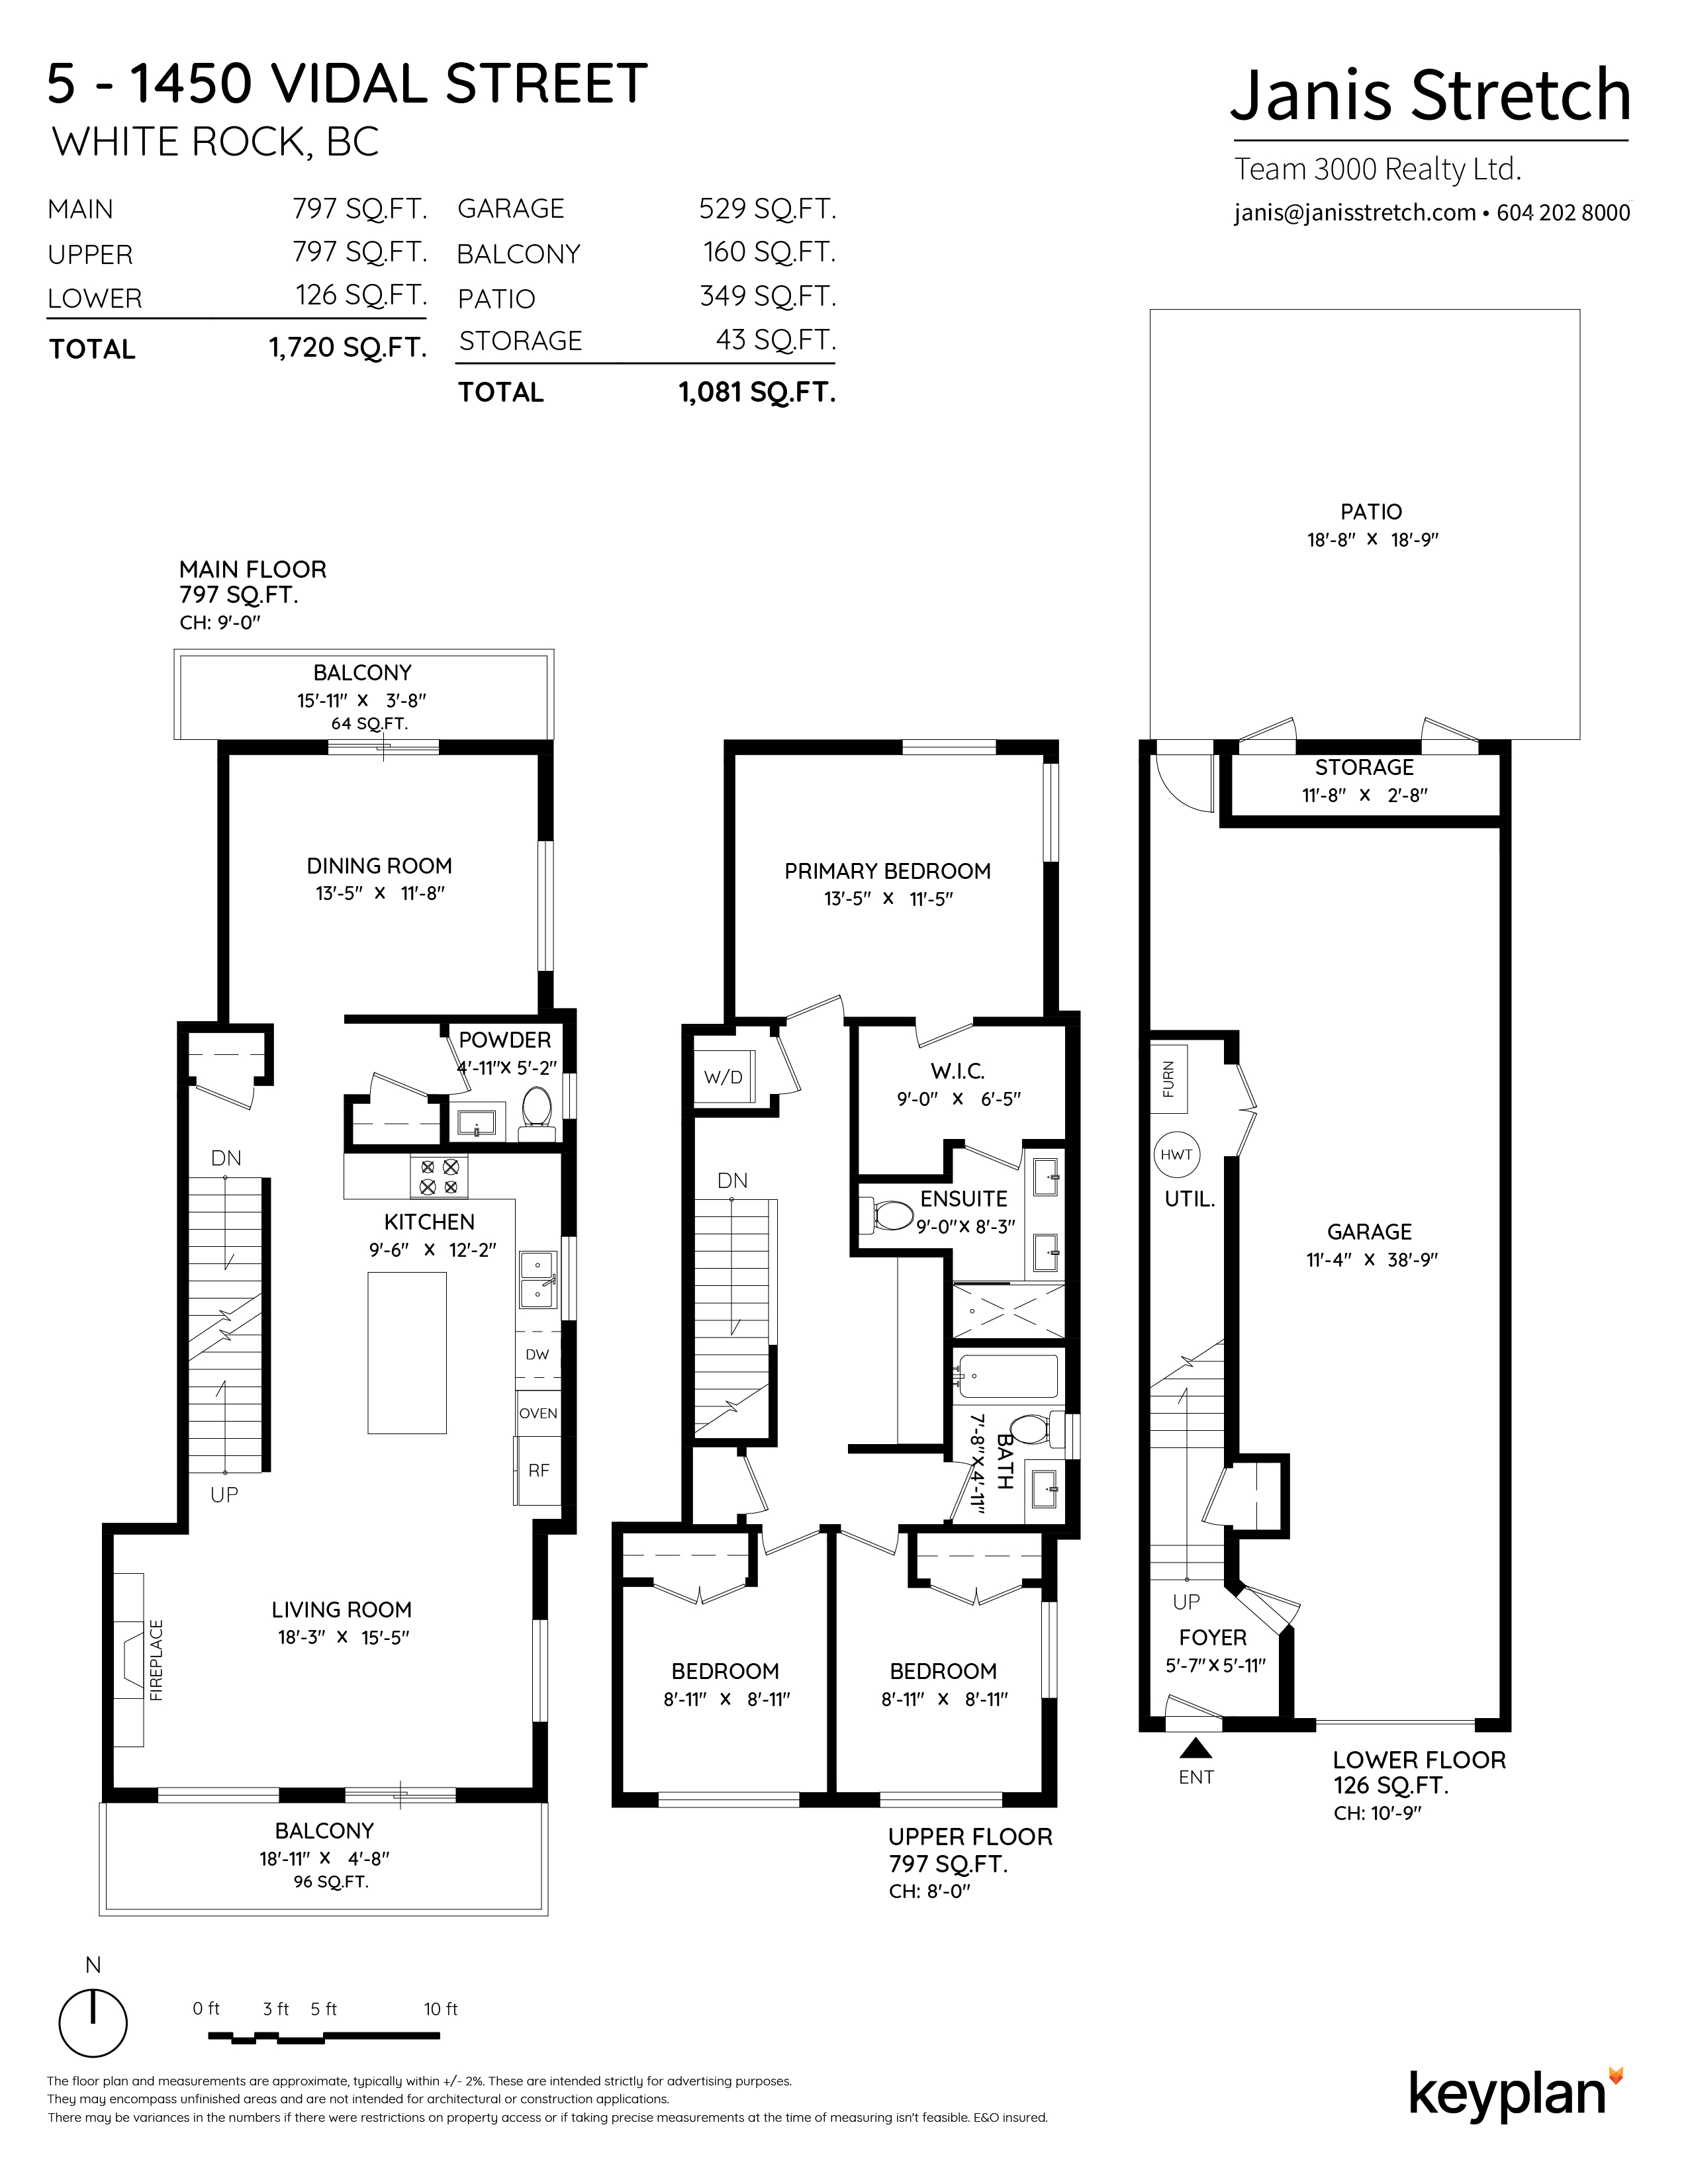 Janis Stretch - Unit 5 - 1450 Vidal Street, White Rock, BC, Canada | Floor Plan 1